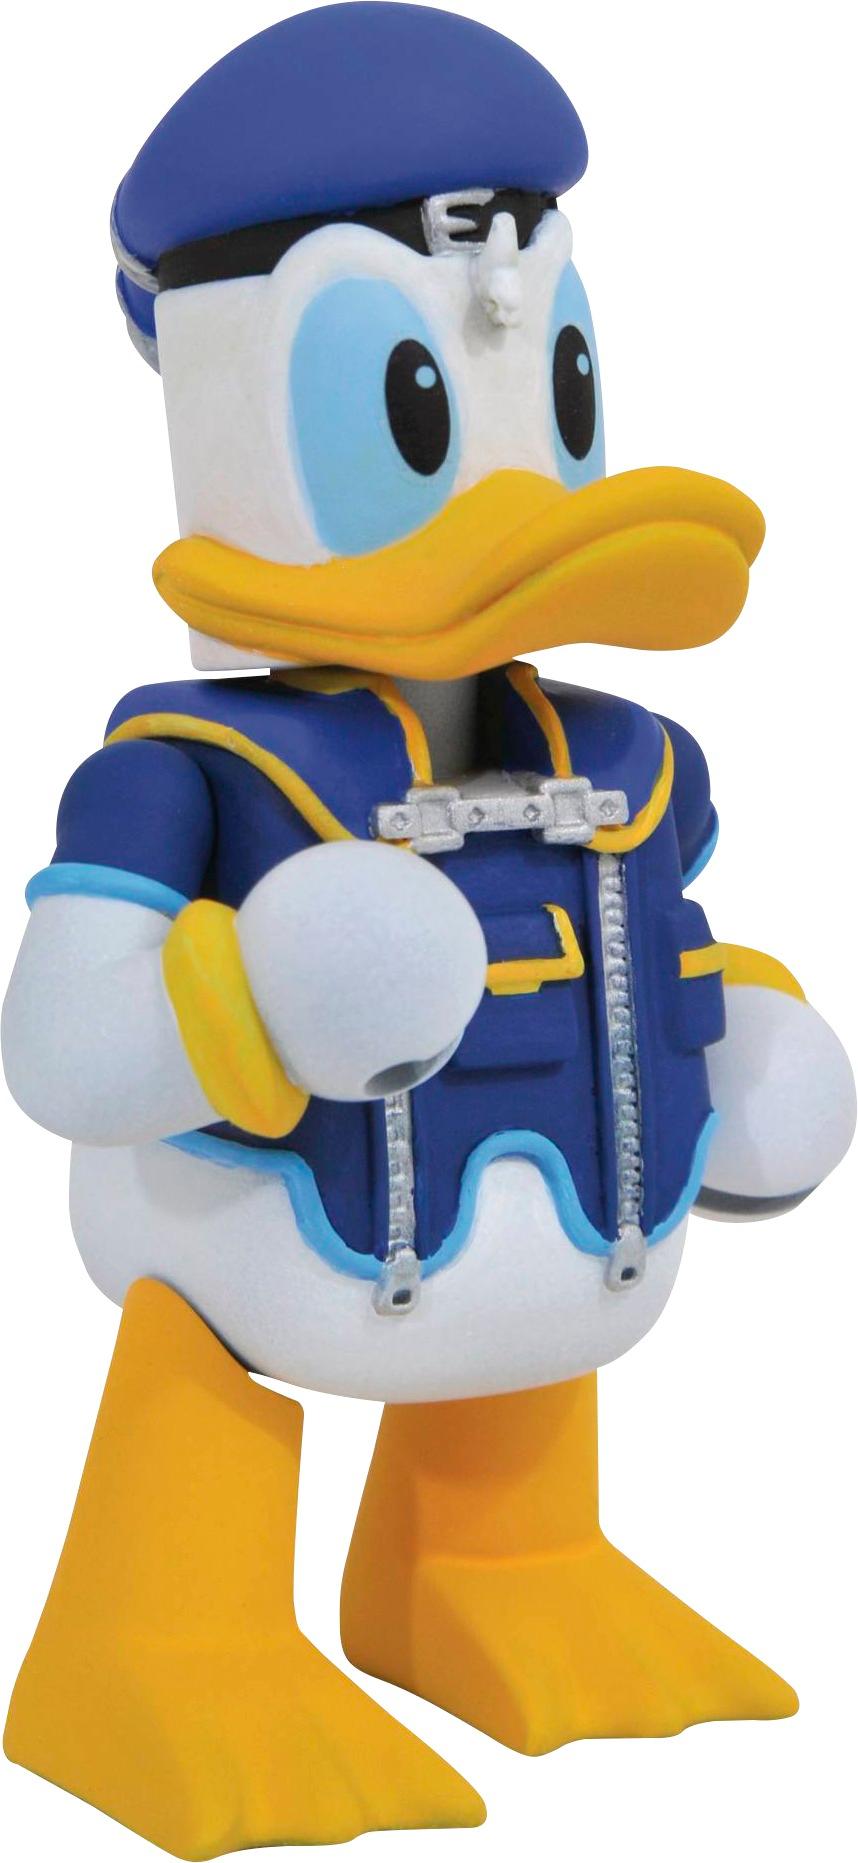 Diamond Select Toys - Kingdom Hearts Vinimates Donald Duck - Yellow, Blue